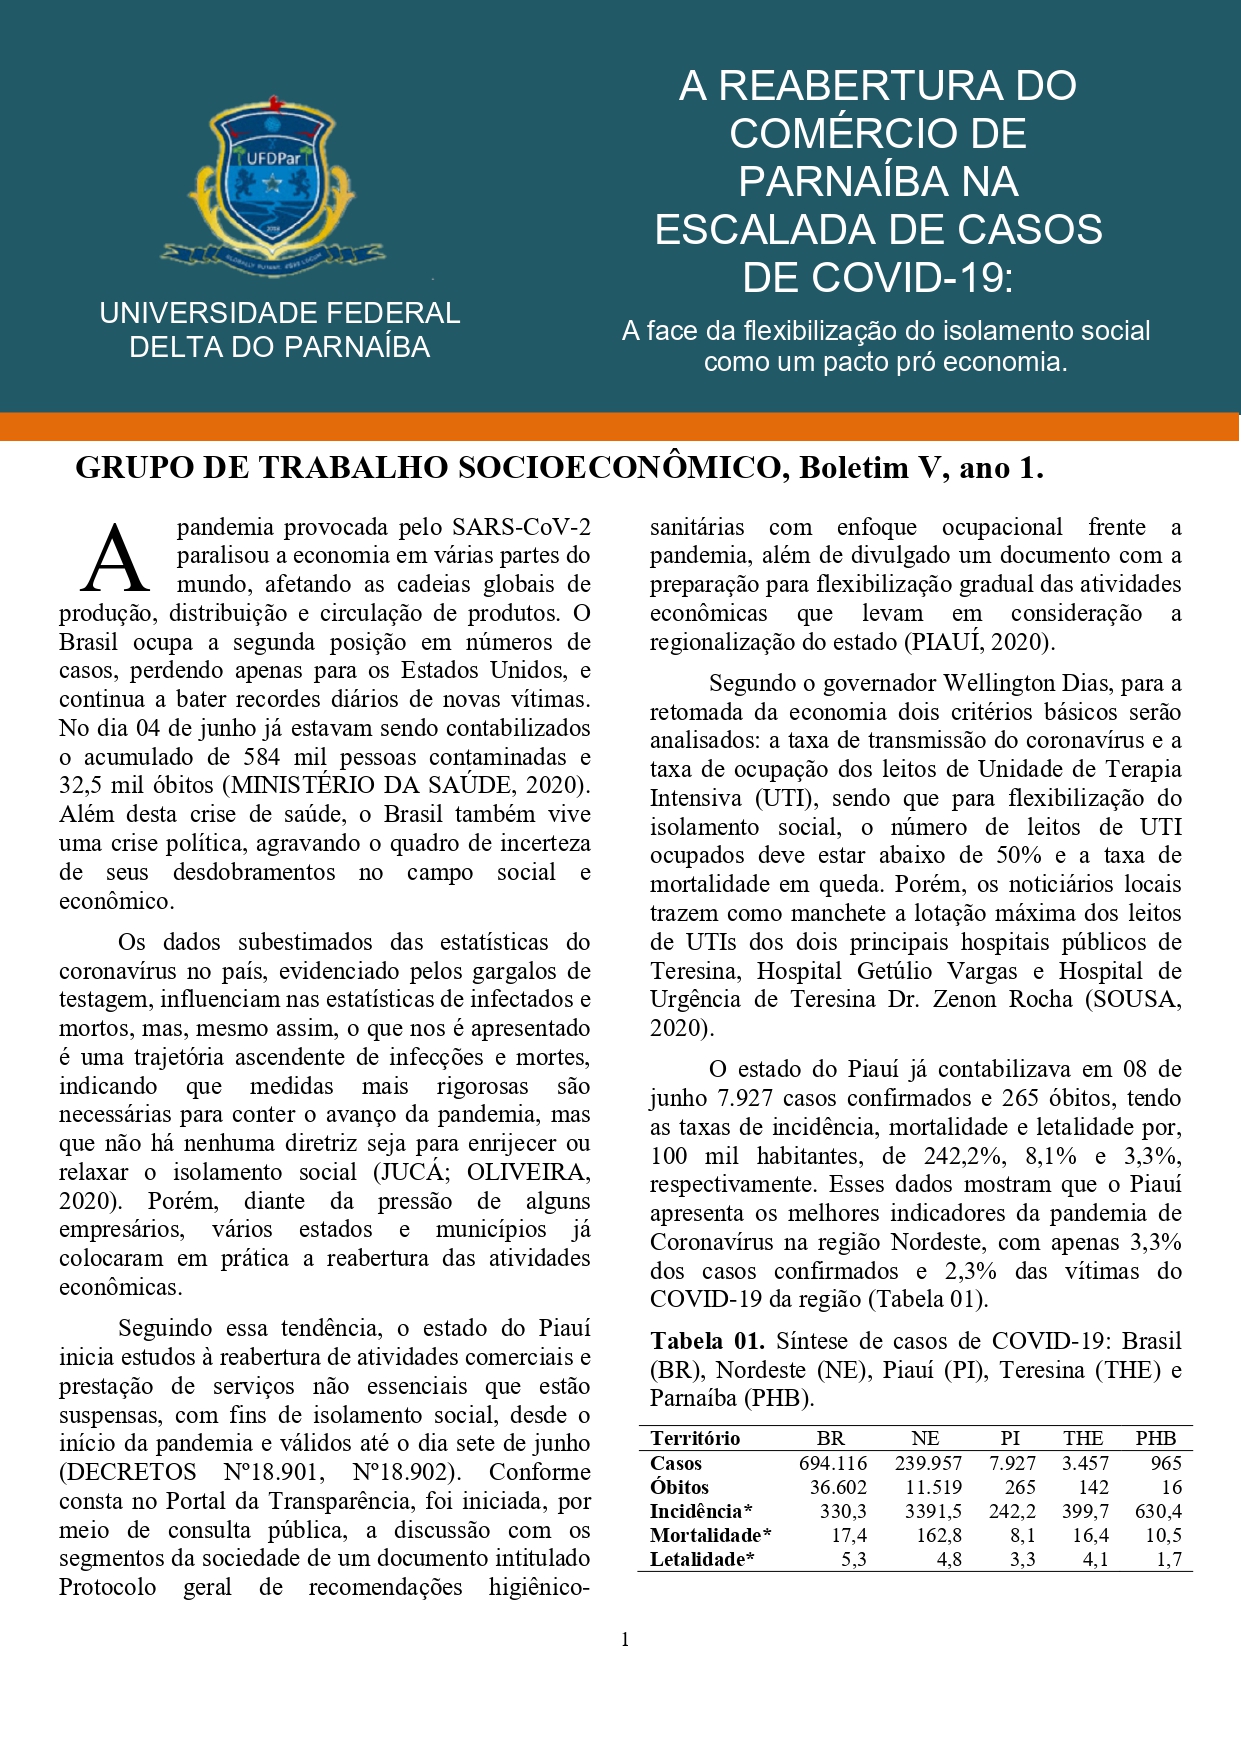 GRUPO DE TRABALHO SOCIOECONÔMICO BOLETIM 05 page 000120200615085104